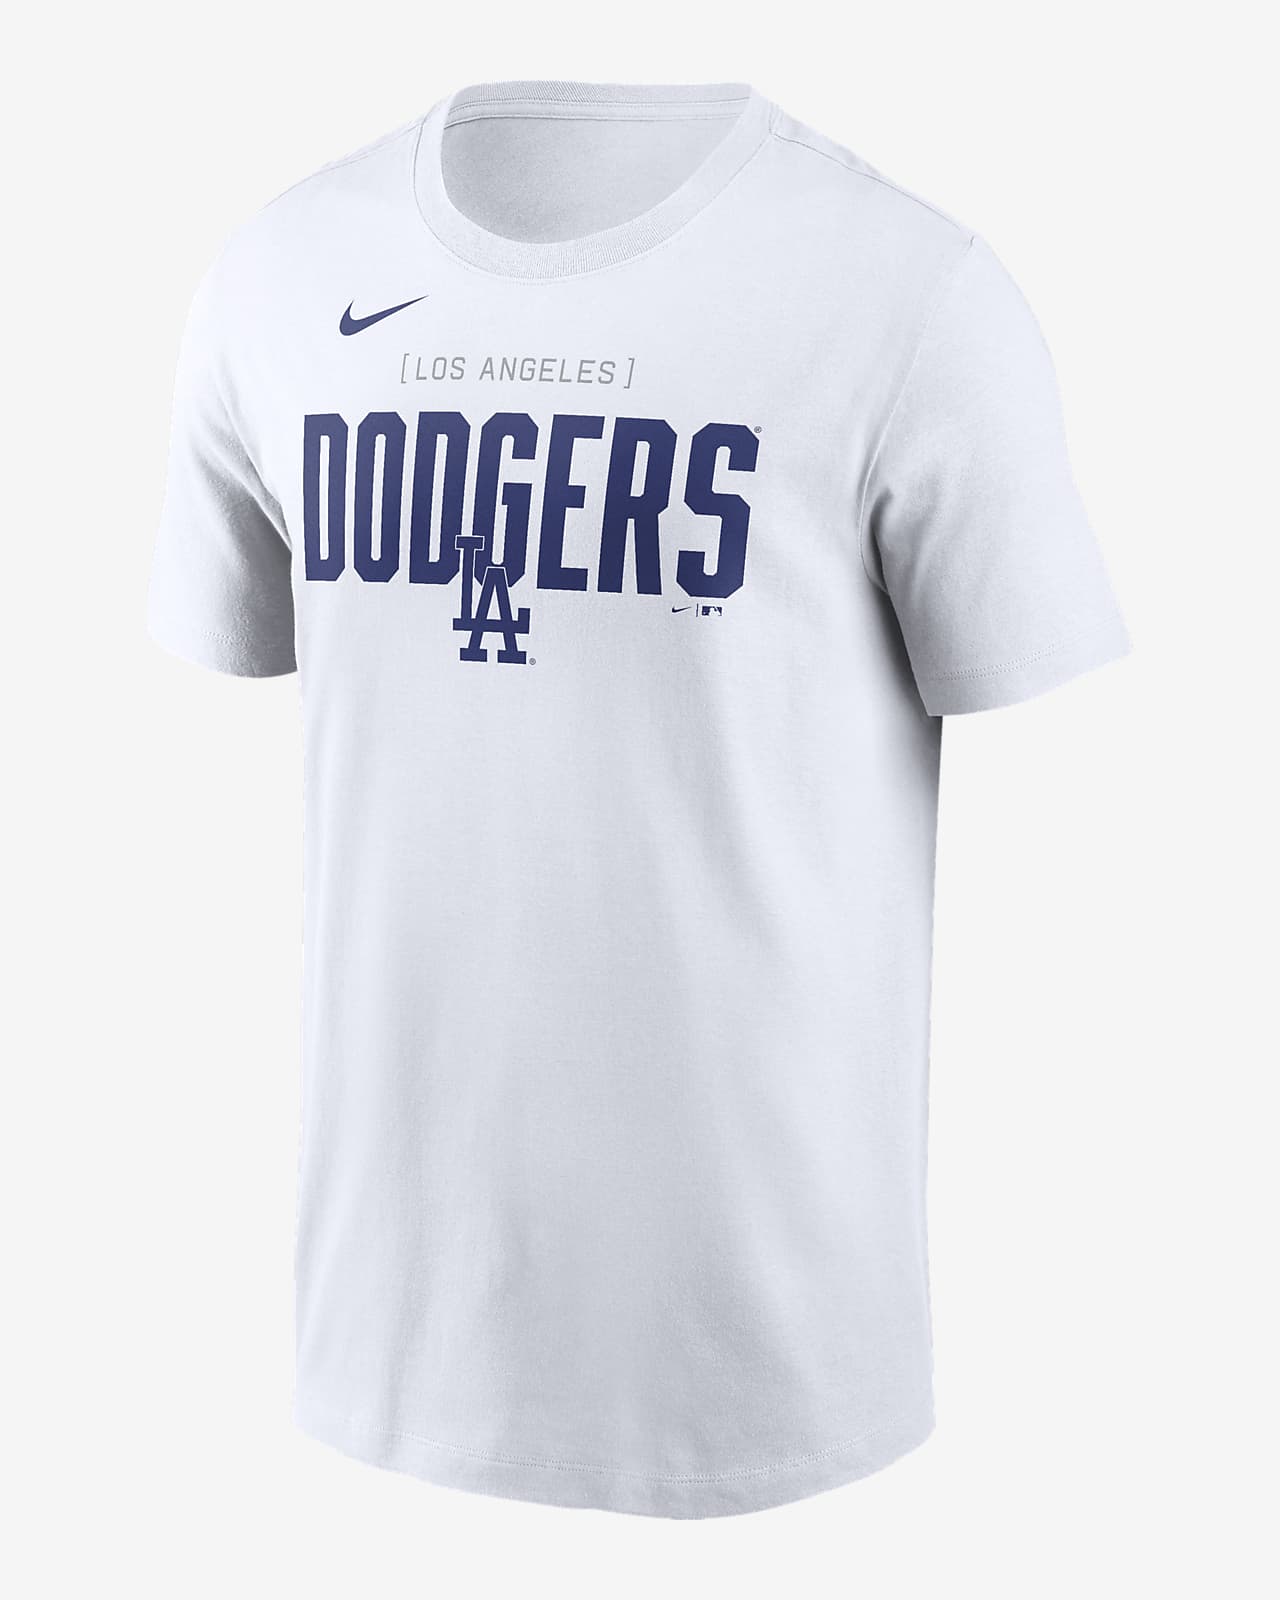 Playera Nike de la MLB para hombre Los Angeles Dodgers Home Team Bracket